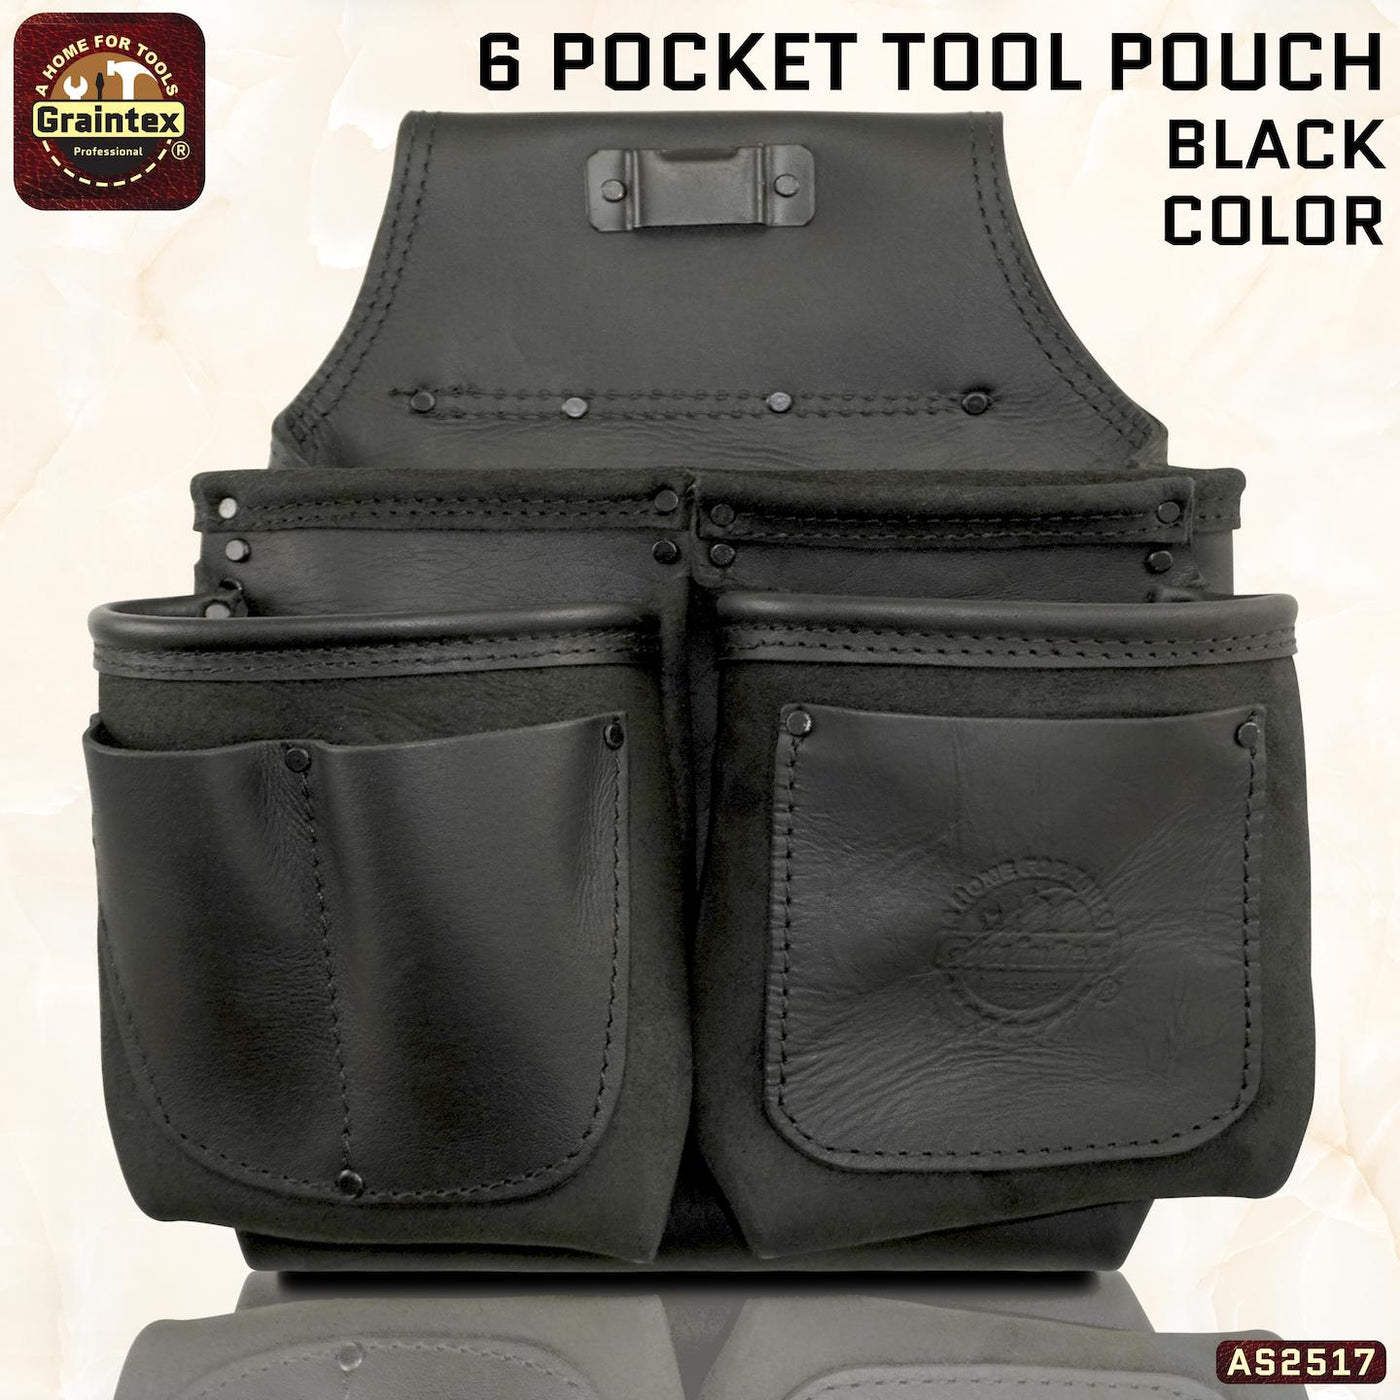 AS2517 :: 6 Pocket Framer’s Tool Pouch Ambassador Series Black Color Top Grain Leather